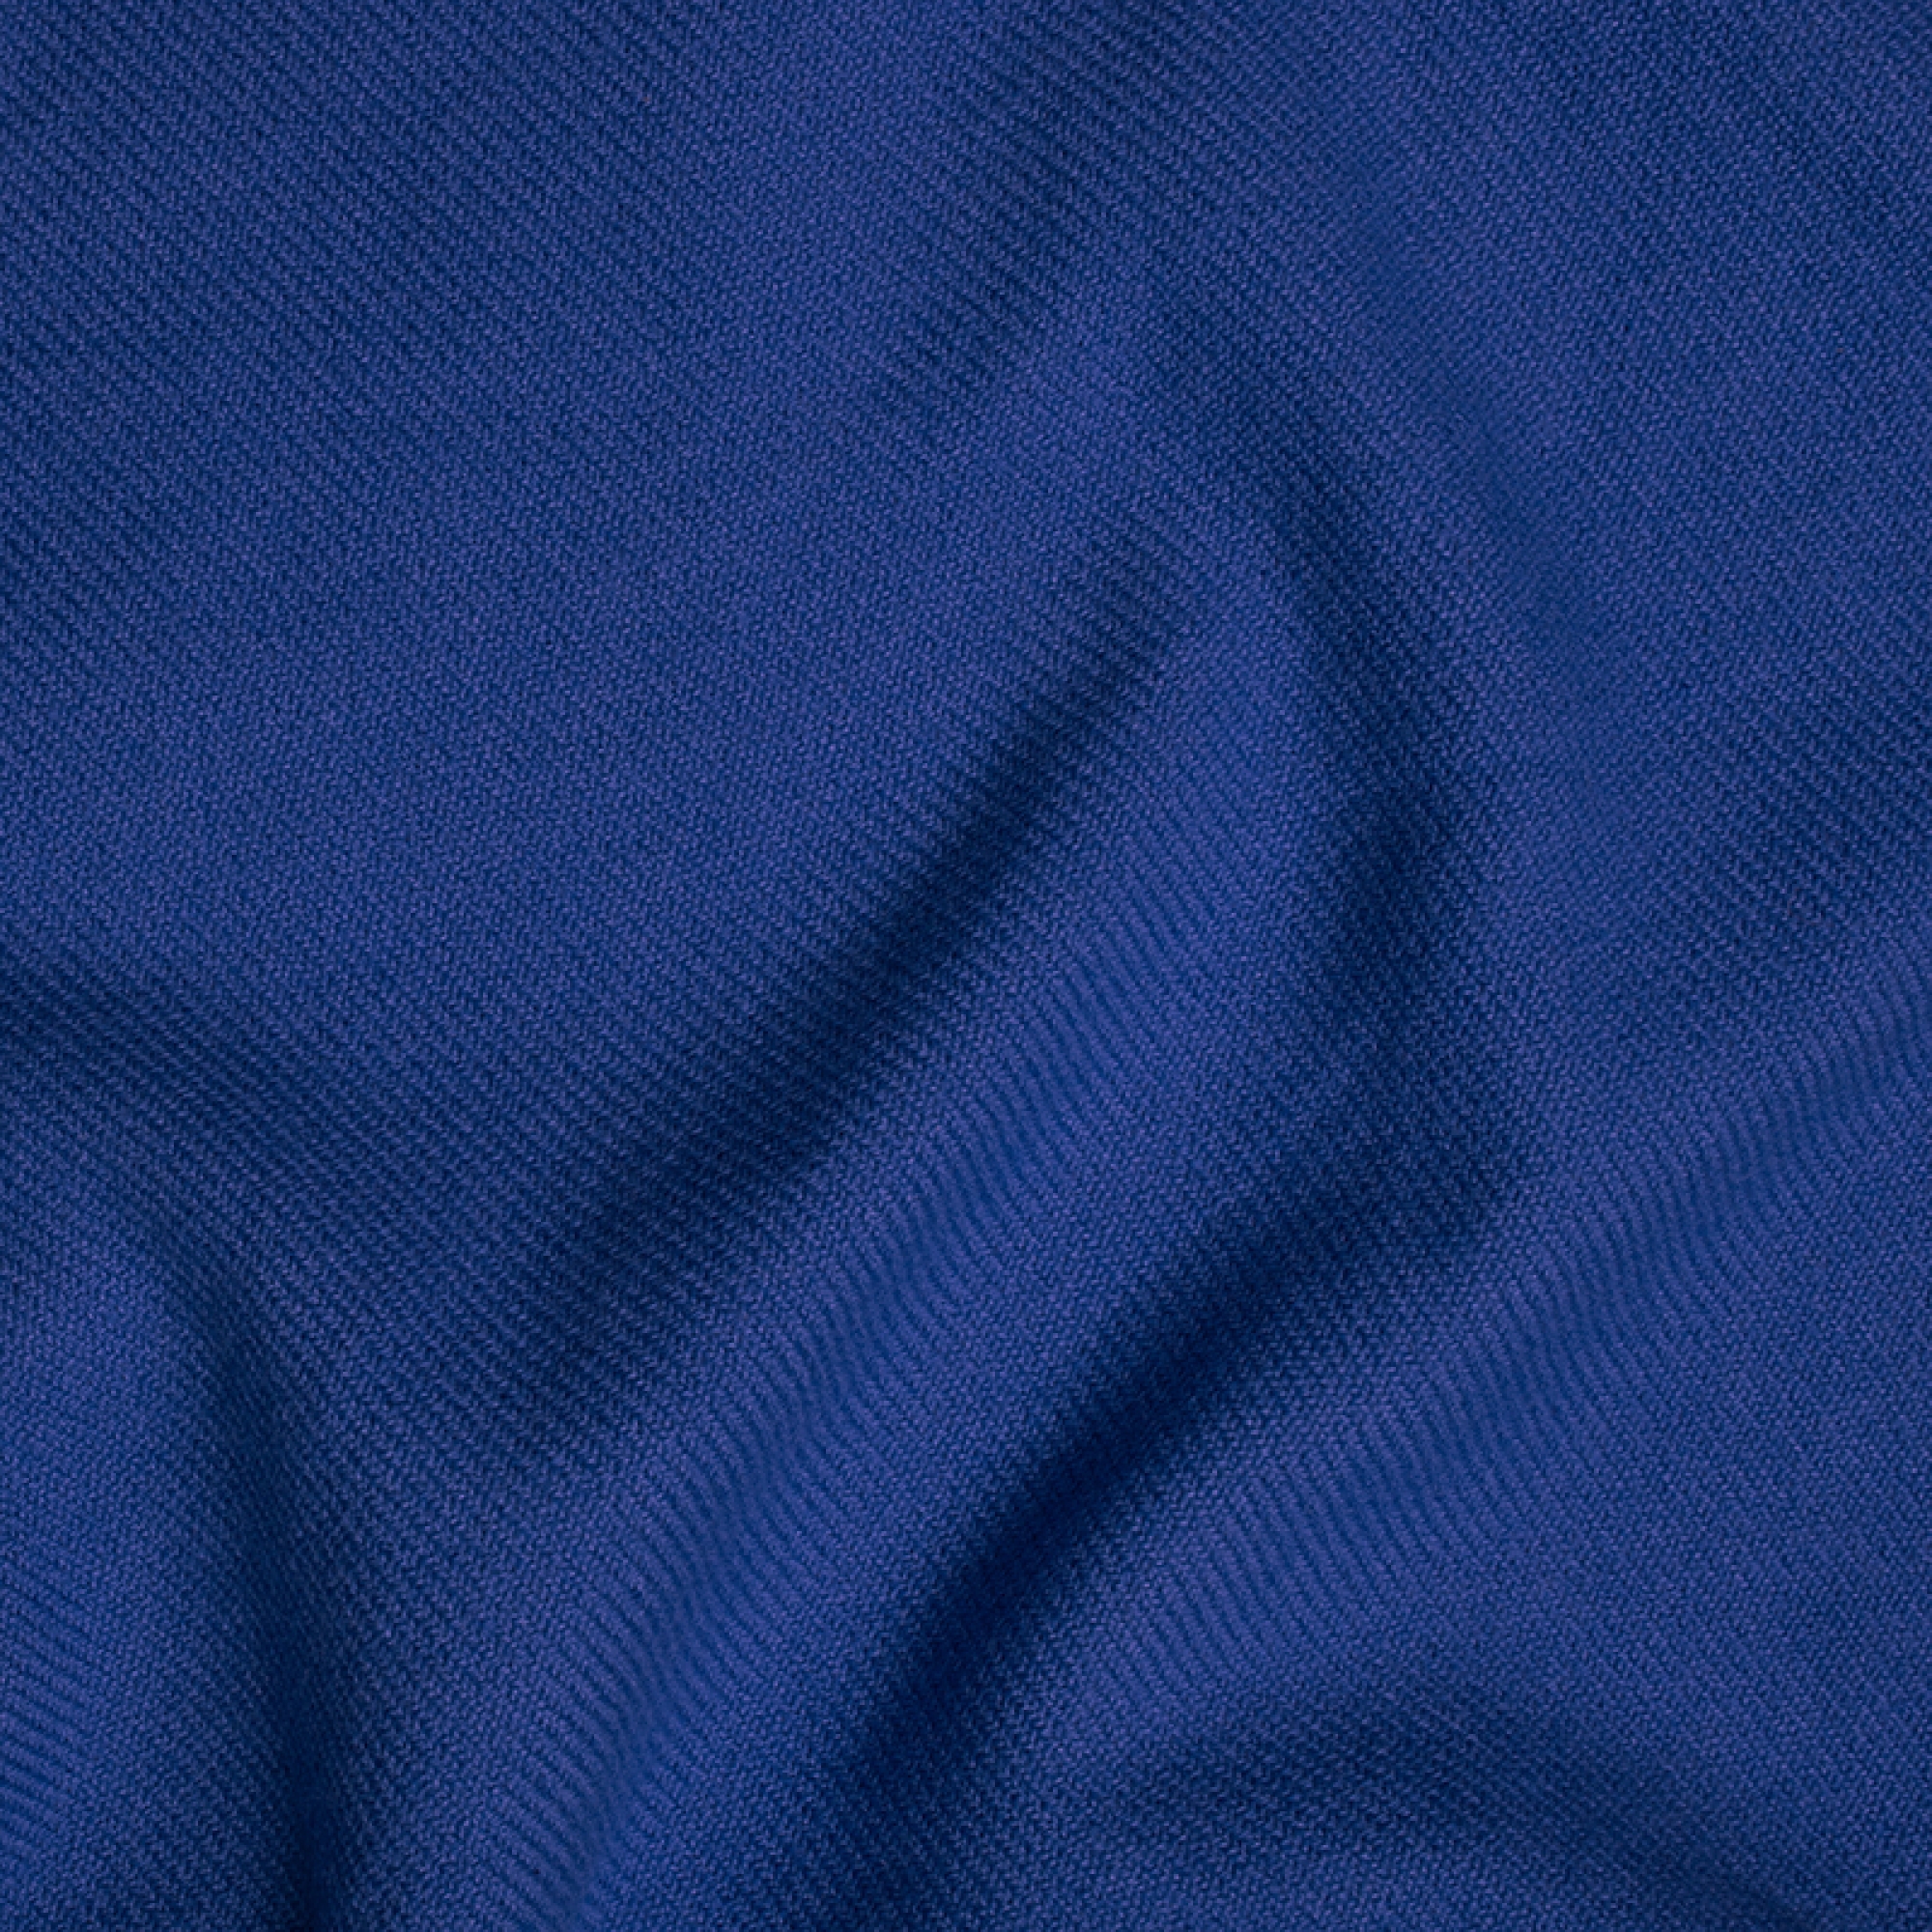 Cachemire pull homme toodoo plain m 180 x 220 bleuet 180 x 220 cm